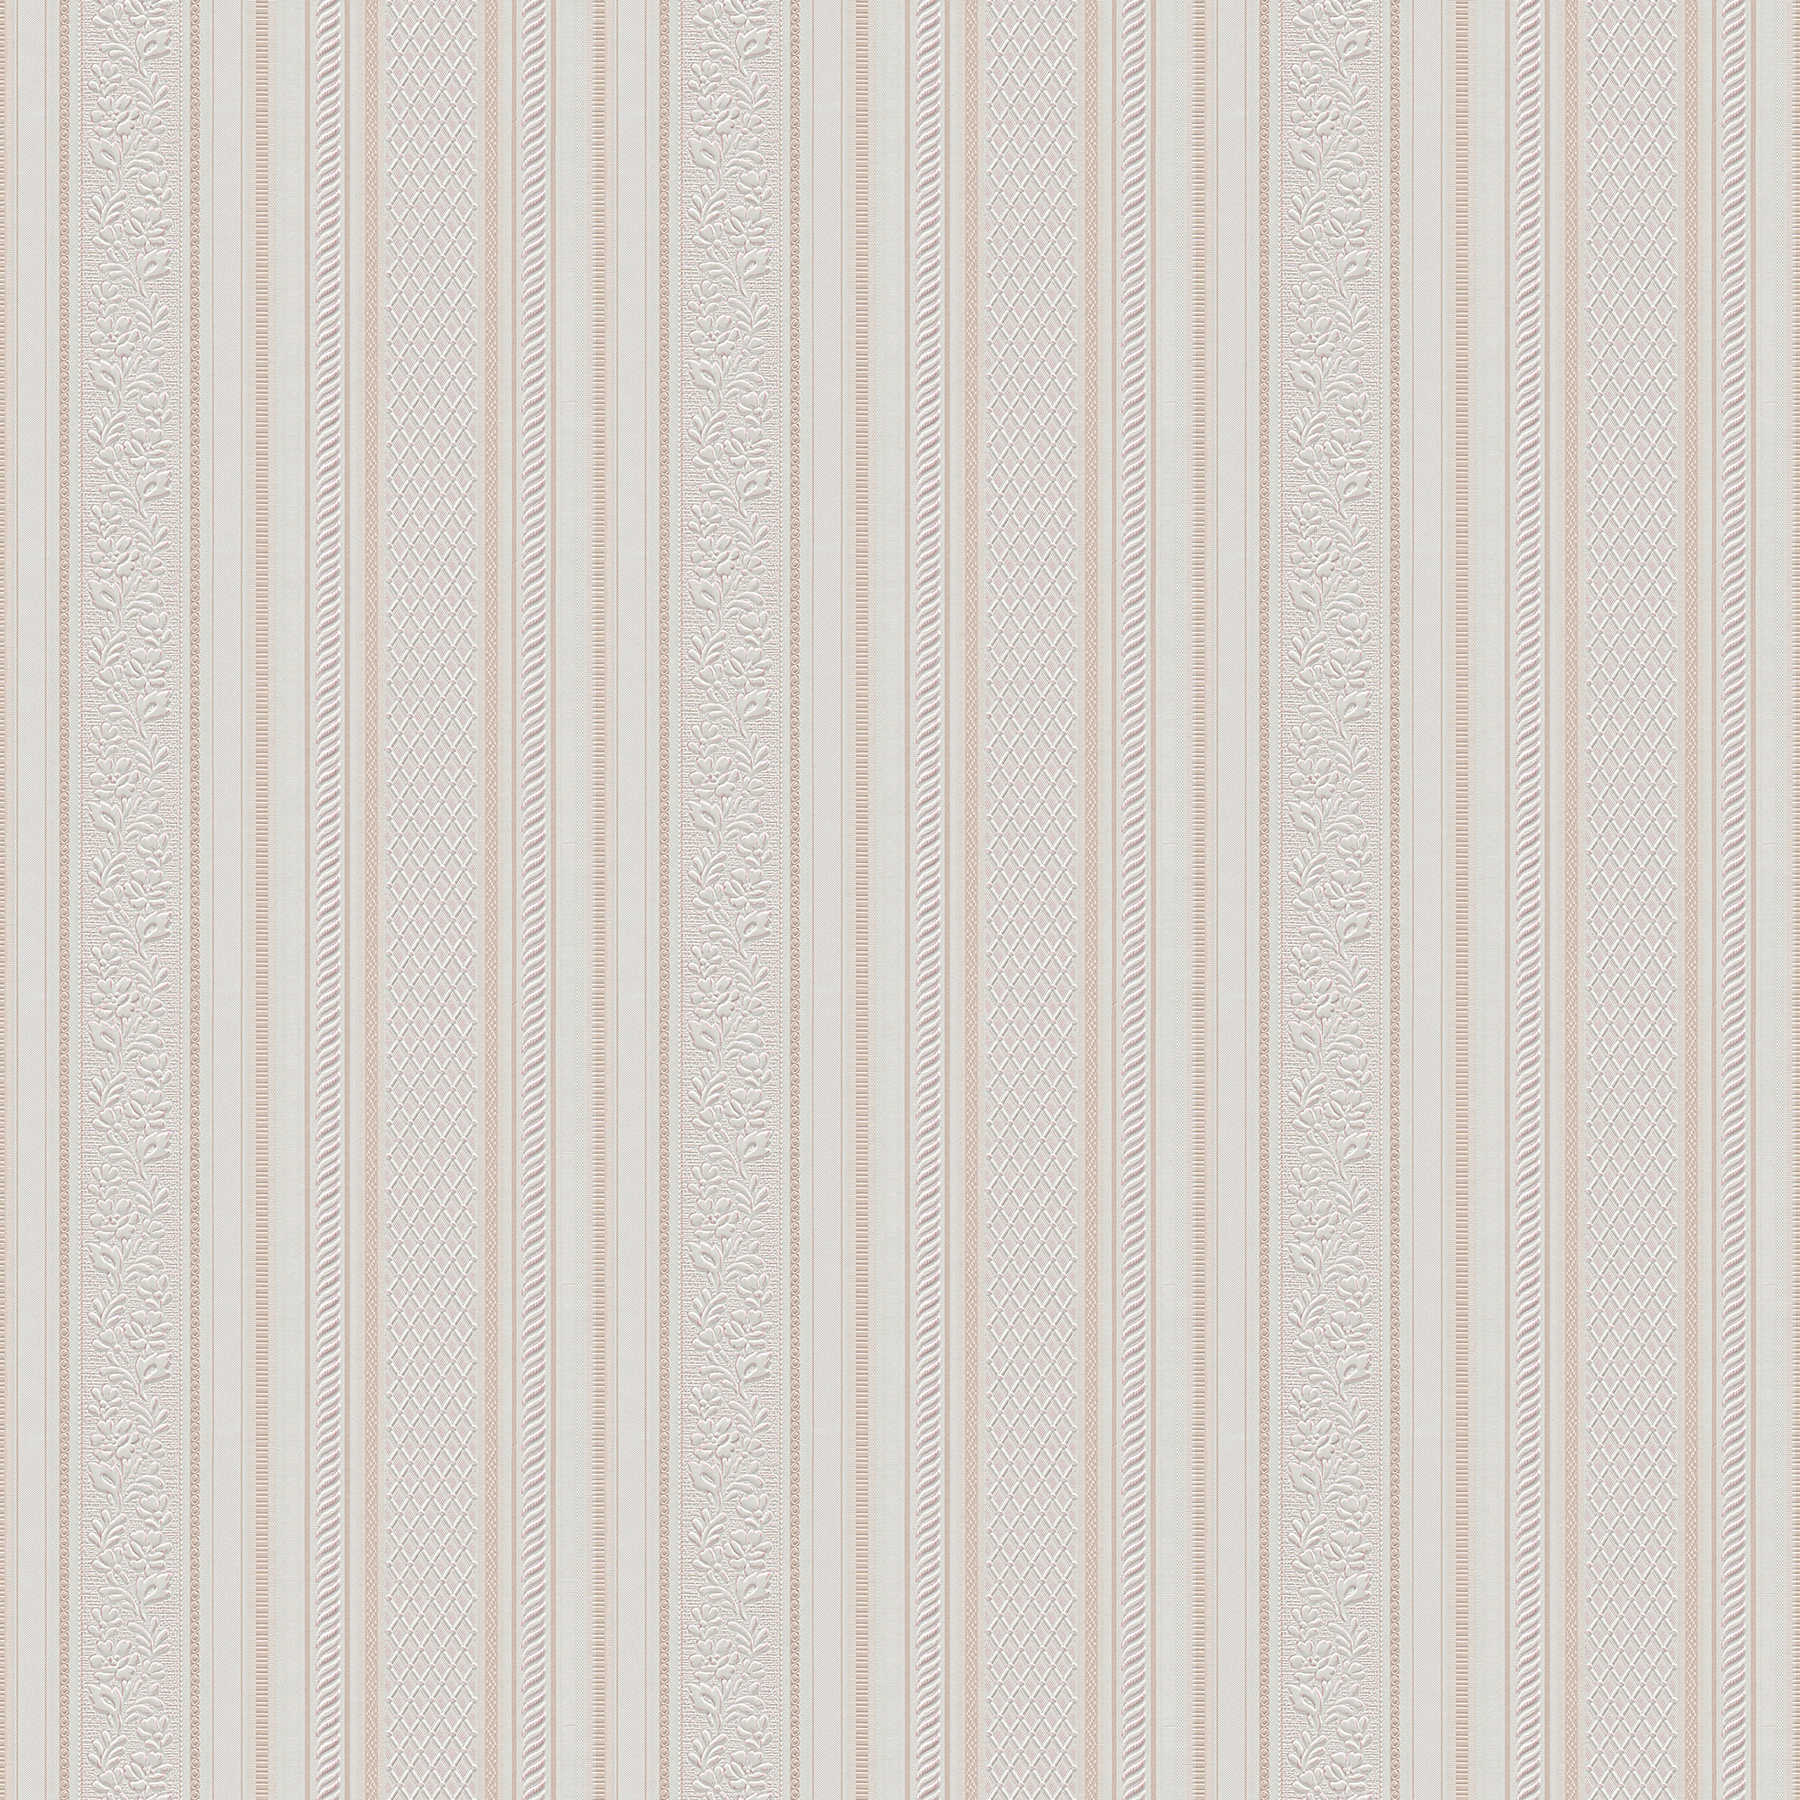 Striped wallpaper with design ornaments Biedermeier style - beige, cream, white
